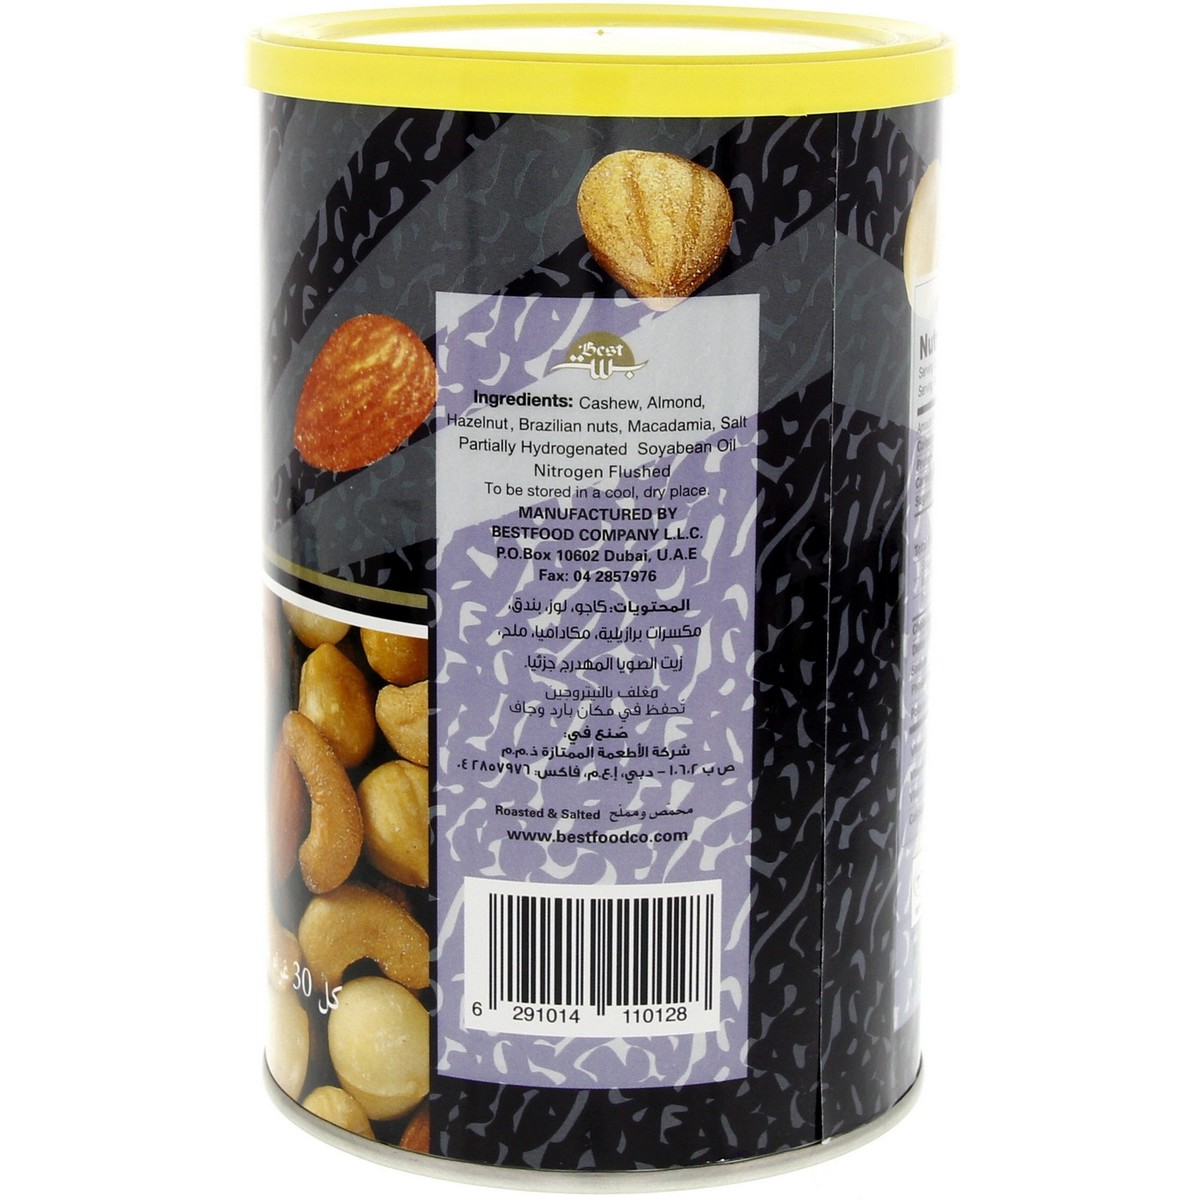 Best Super Mix Nuts 450 g